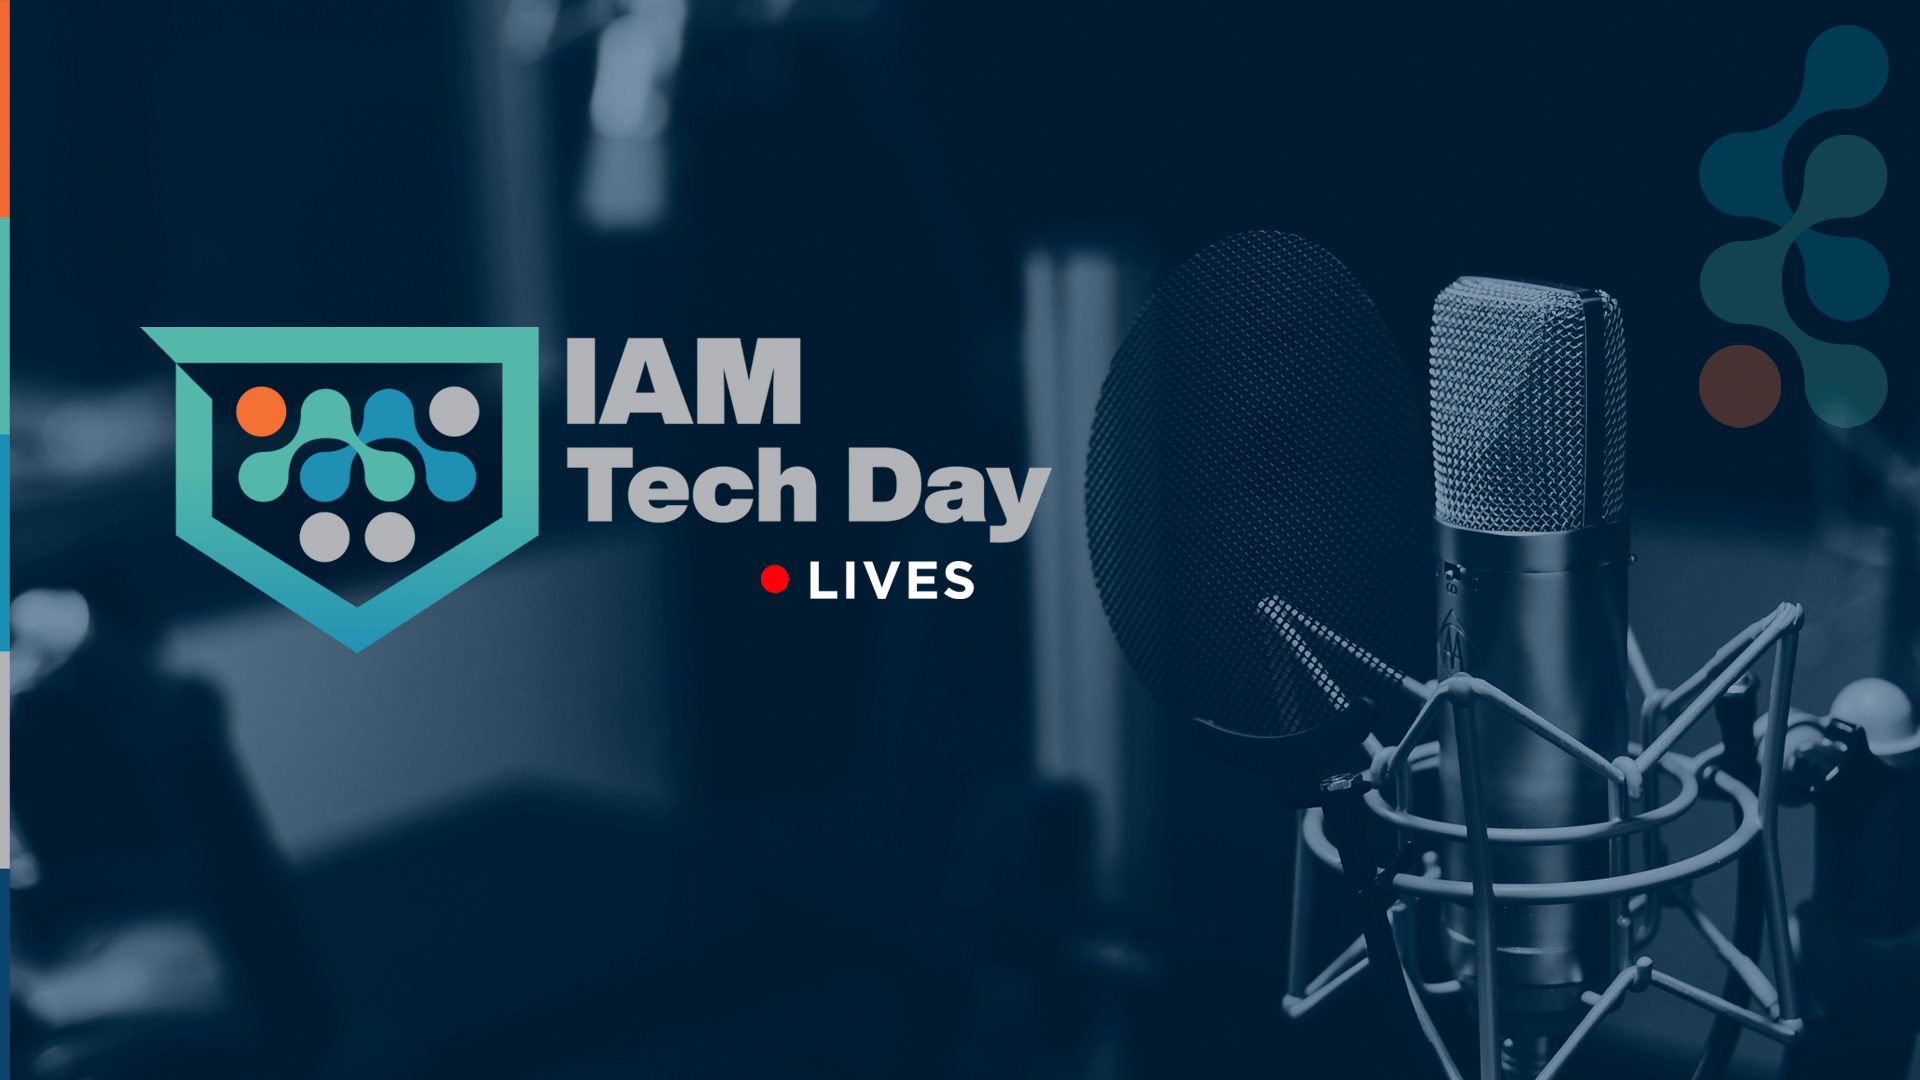 IAM Tech Day Lives